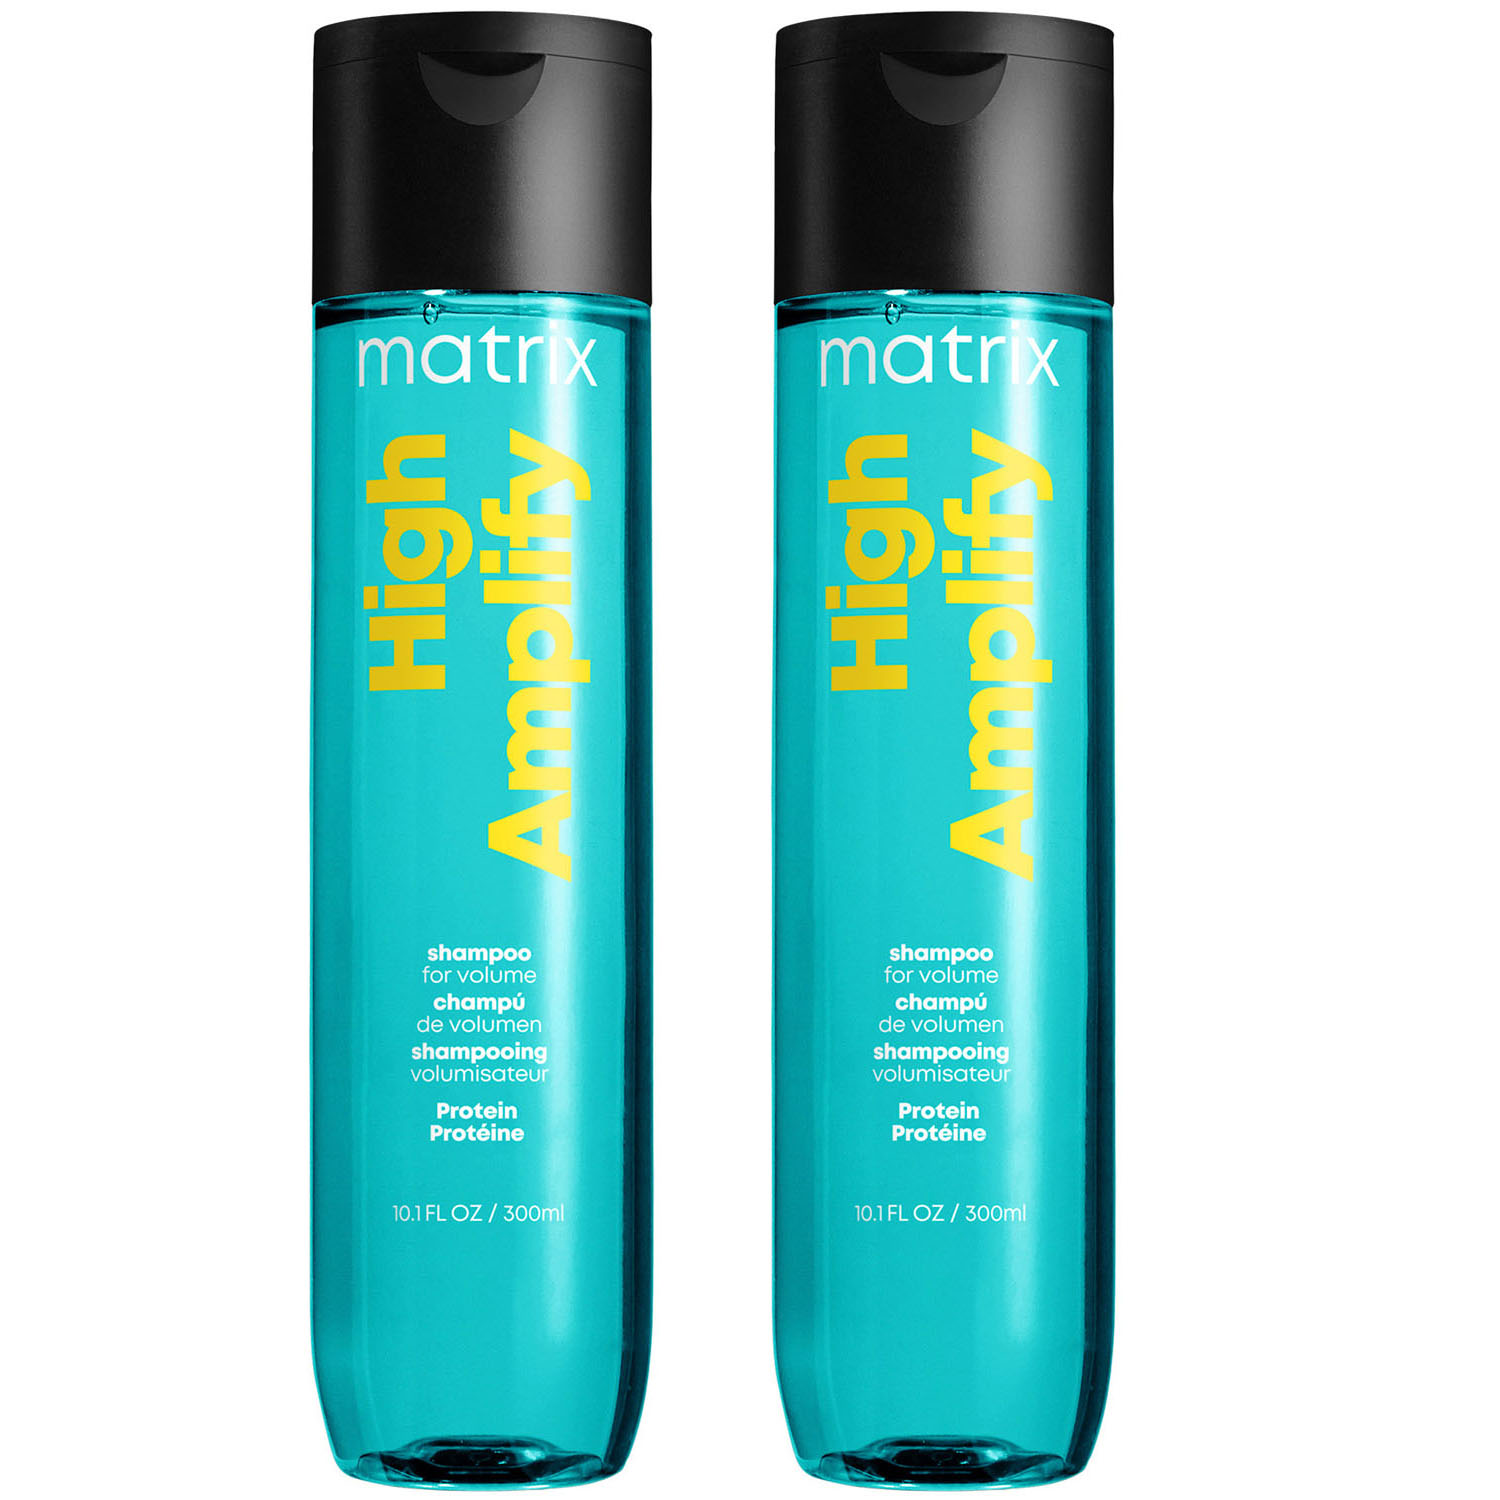 Matrix Набор: шампунь для объема волос High Amplify, 2 шт х 300 мл (Matrix, Total results)